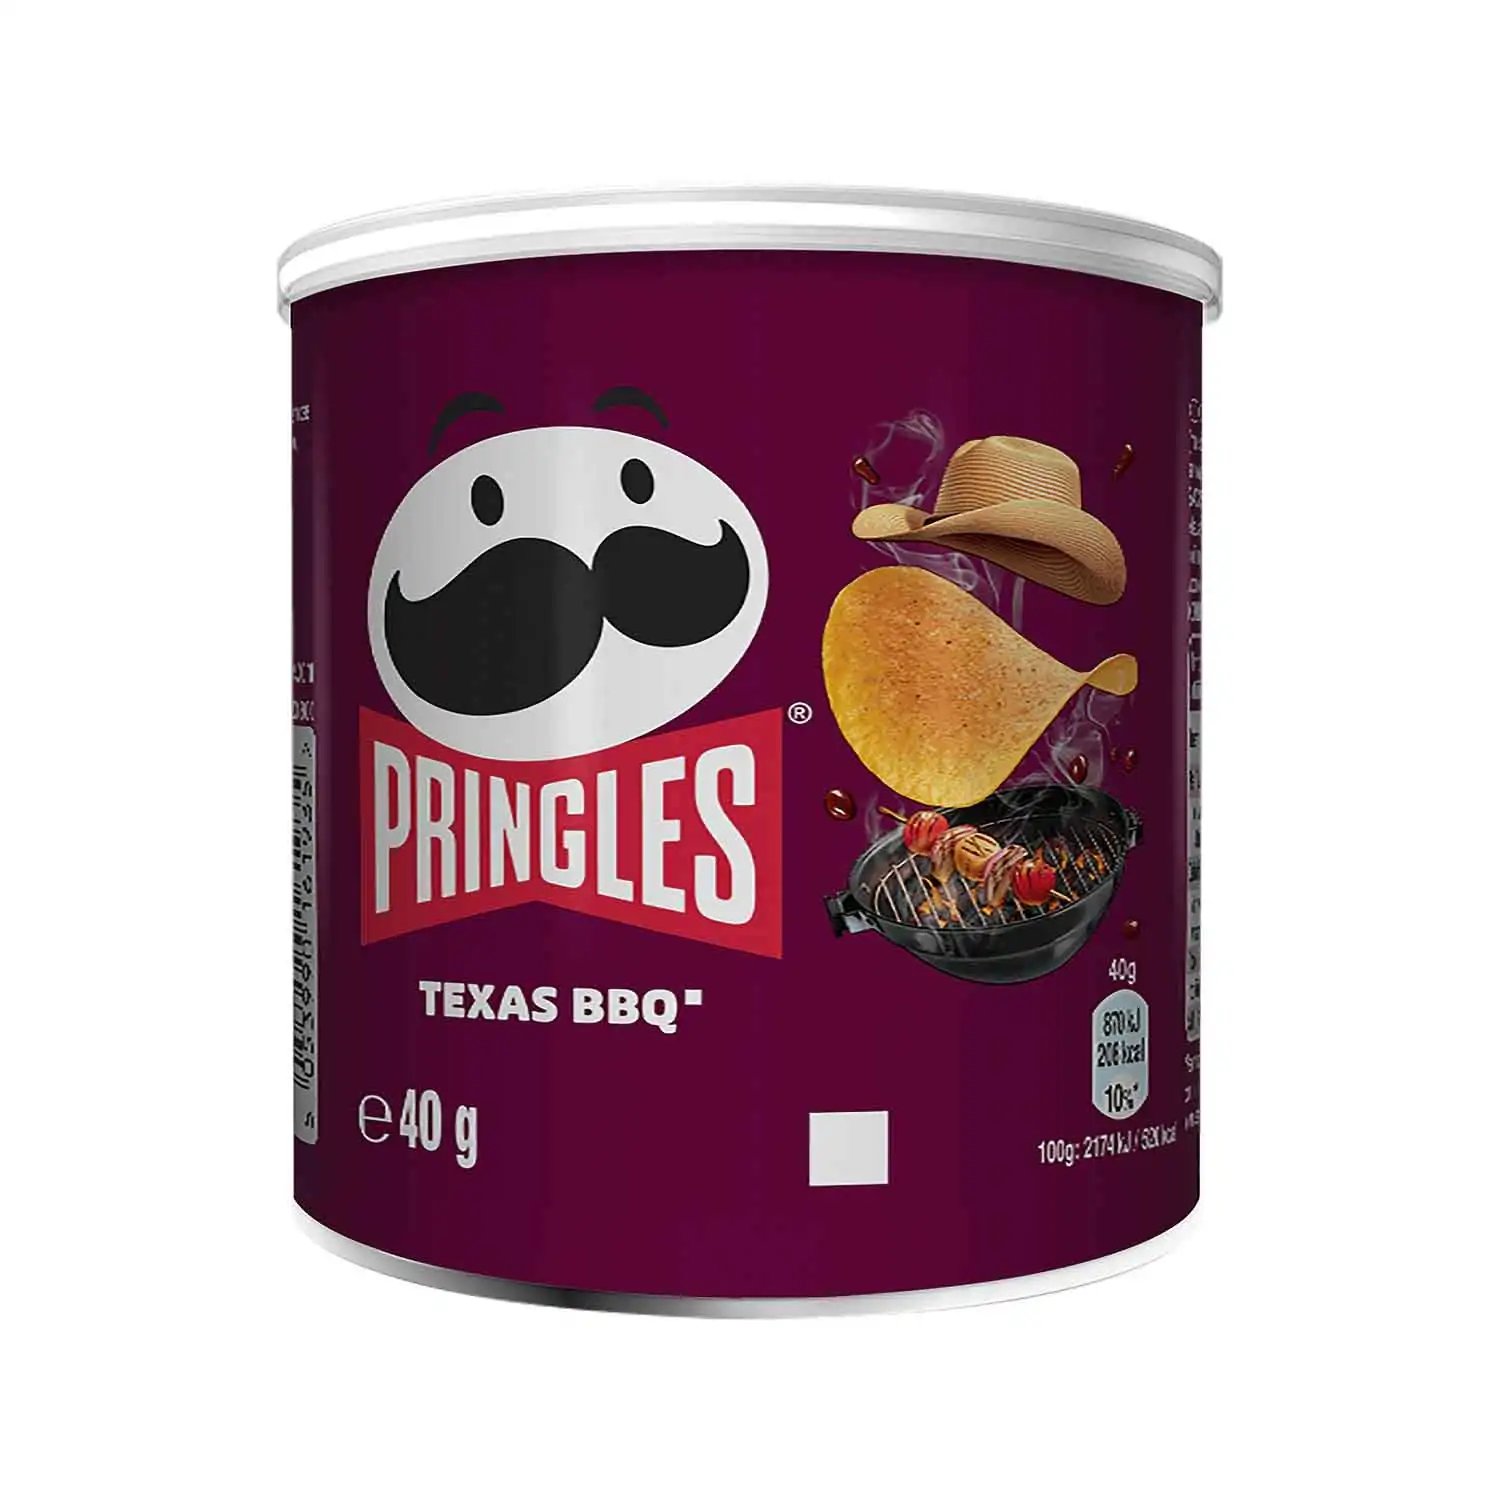 Pringles sauce barbecue texane 40g - Buy at Real Tobacco